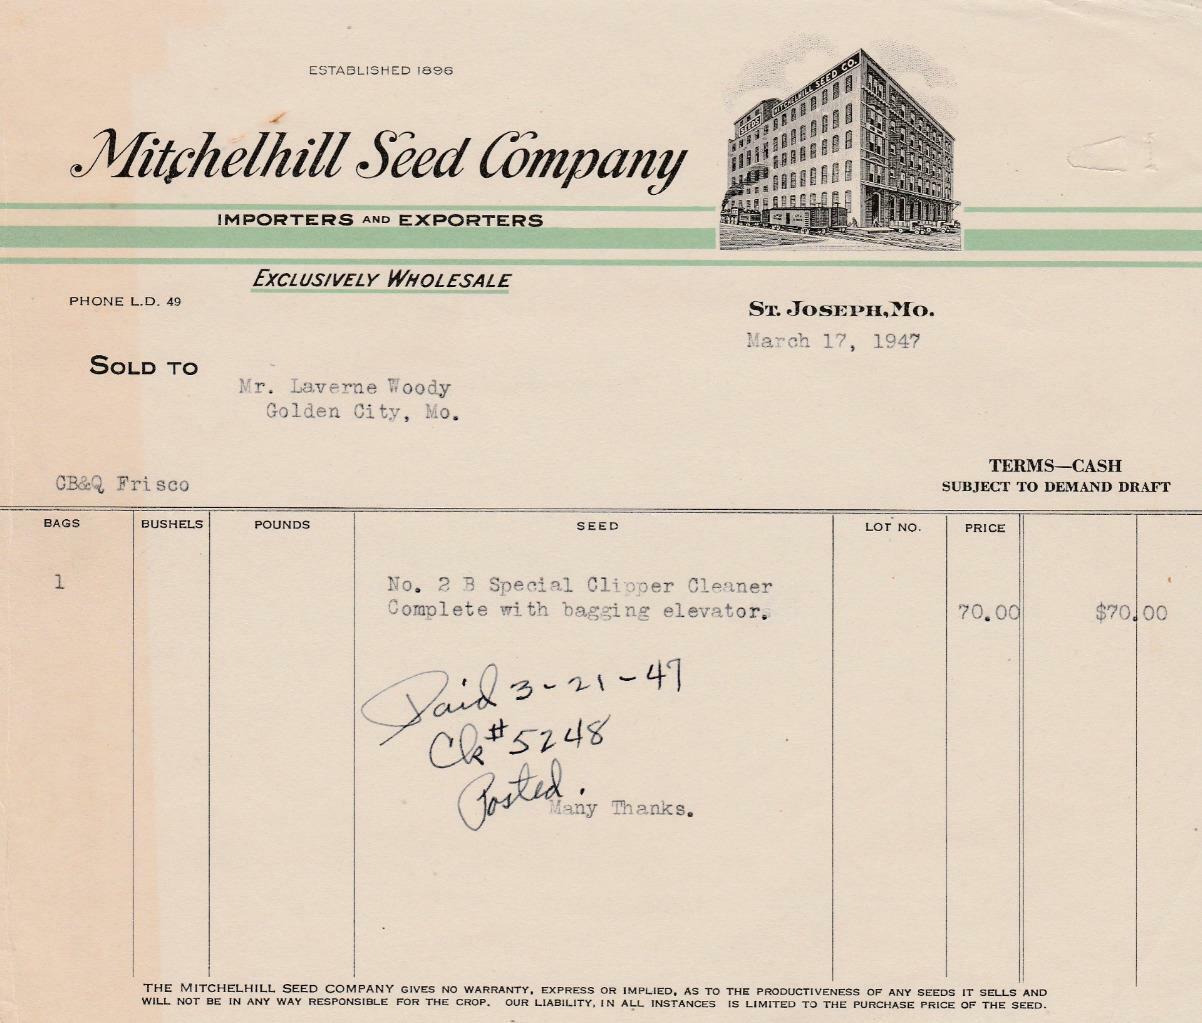 1947 Invoice Mitchelhill Seed Co. Importers & Exporters Wholesale St. Joseph, Mo